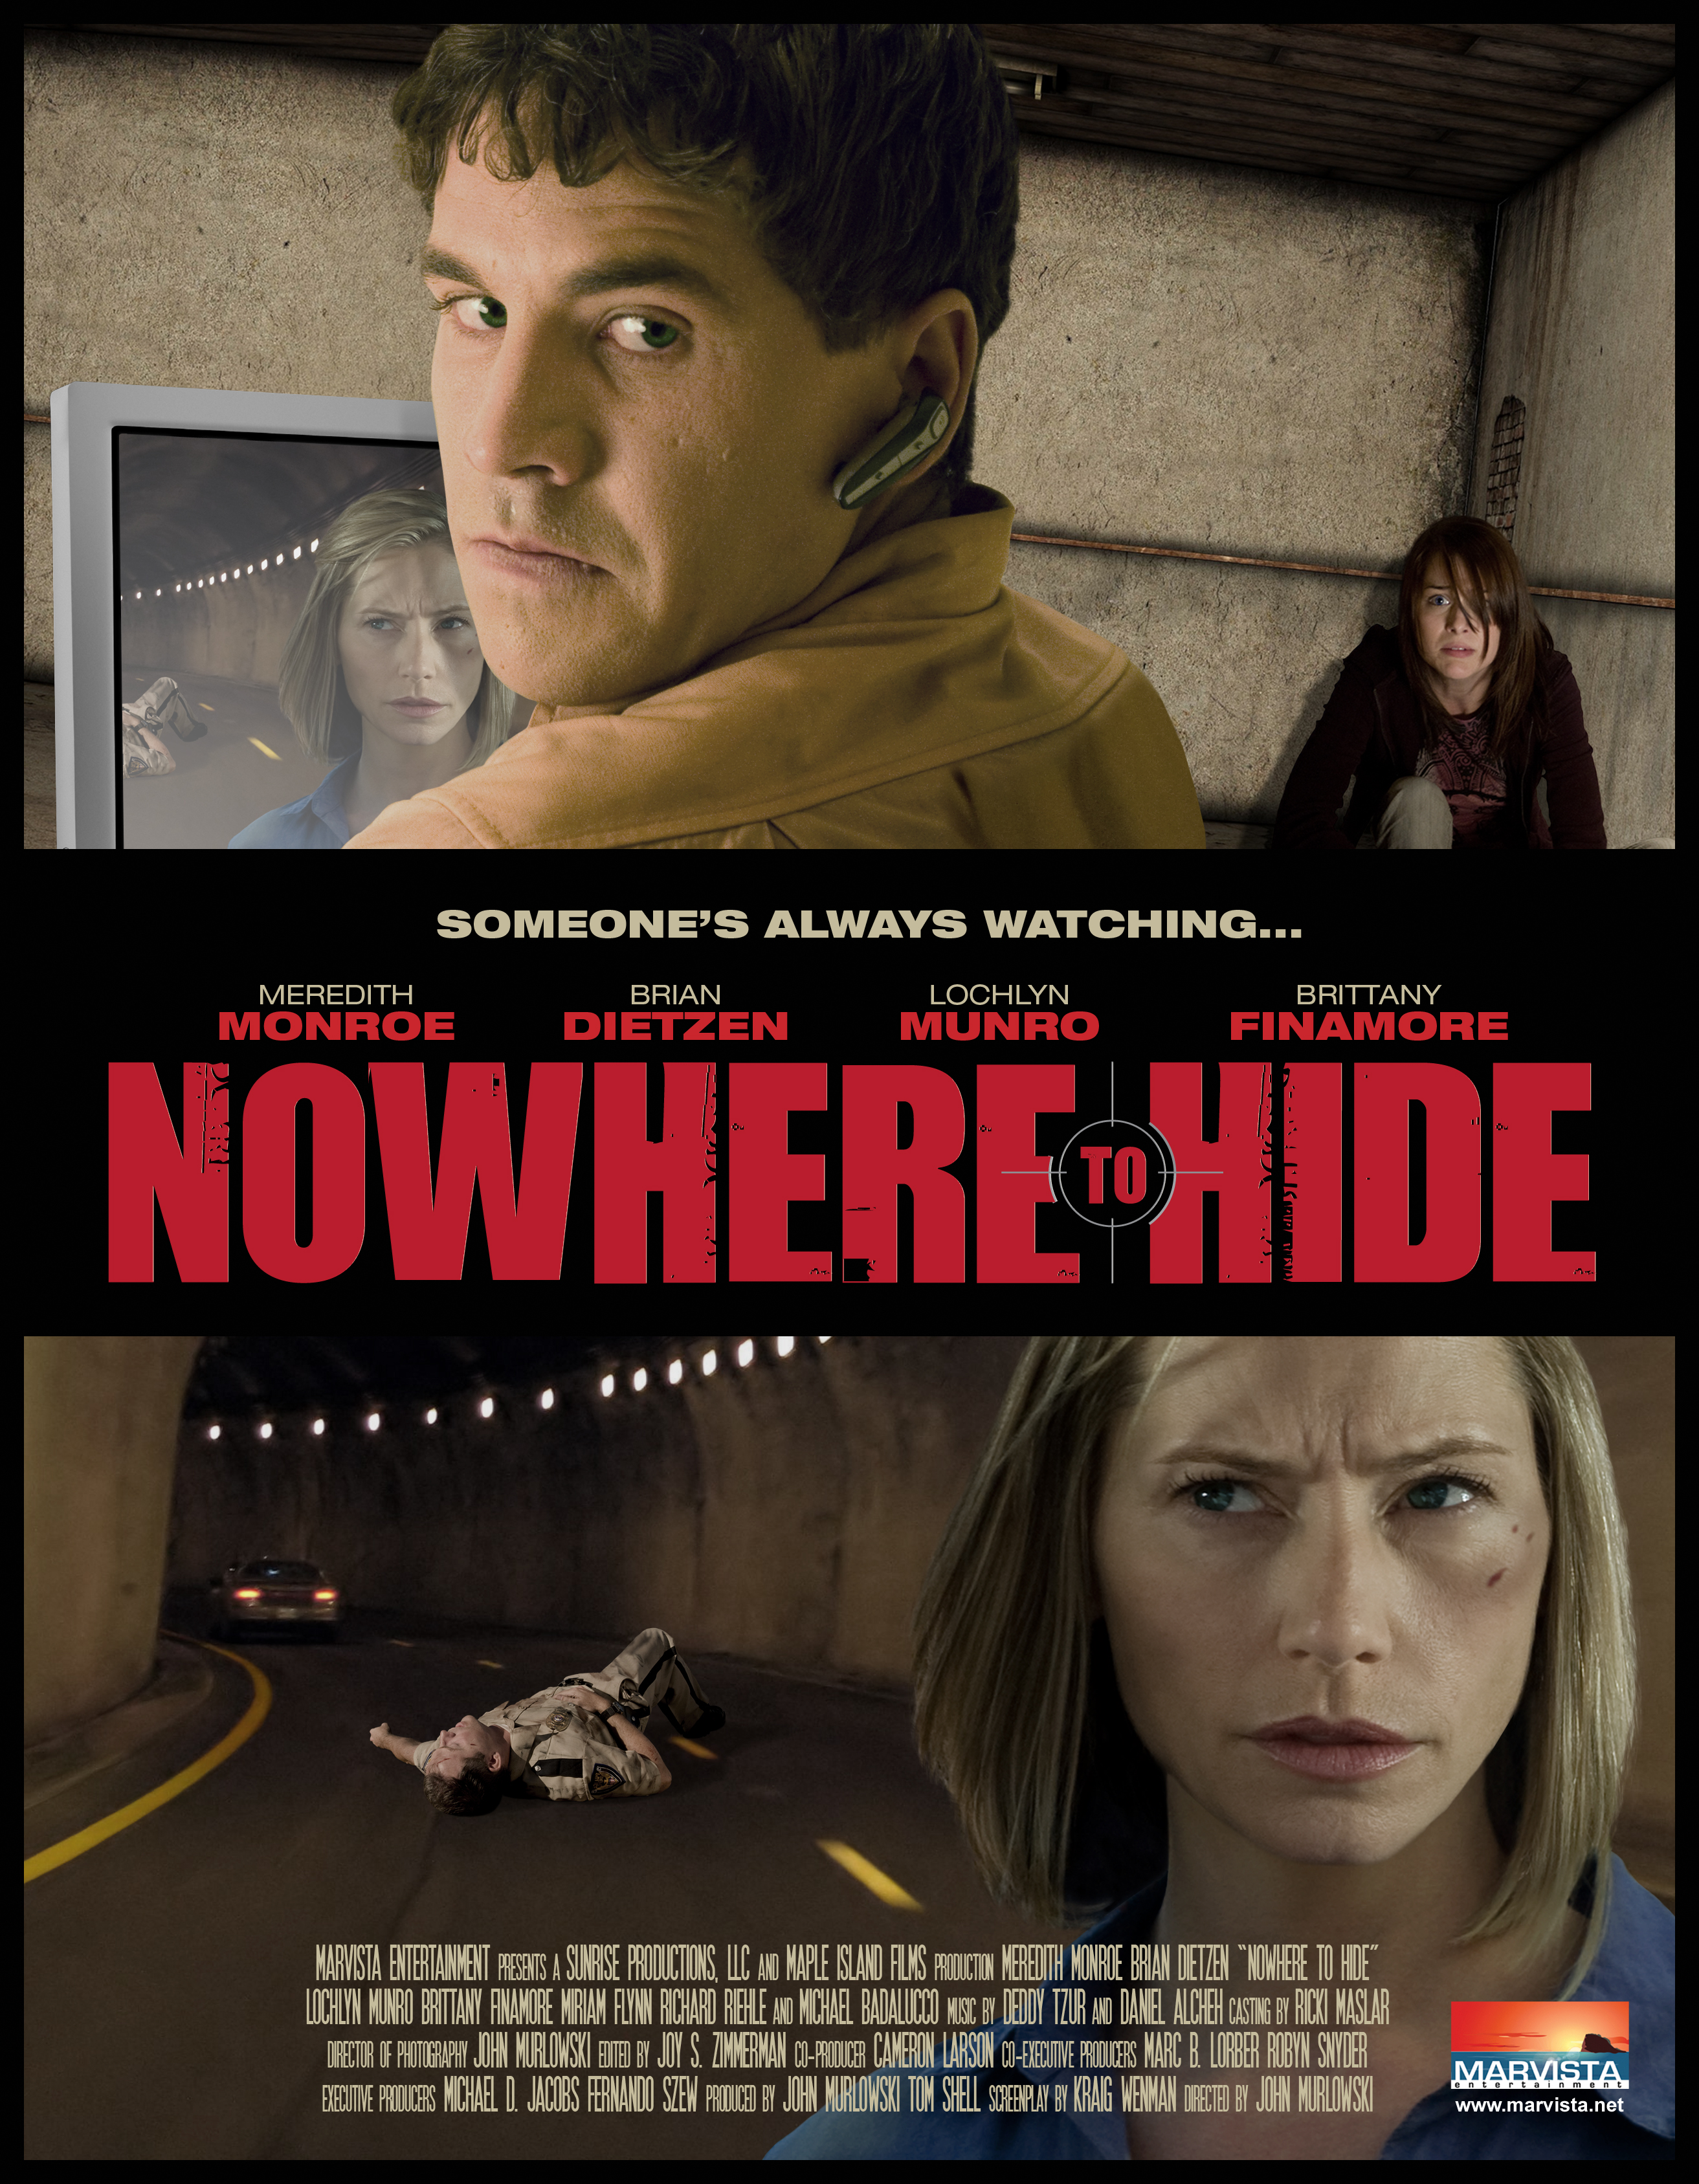 Sola contro tutti - Nowhere to hide (2010) streaming film megavideo